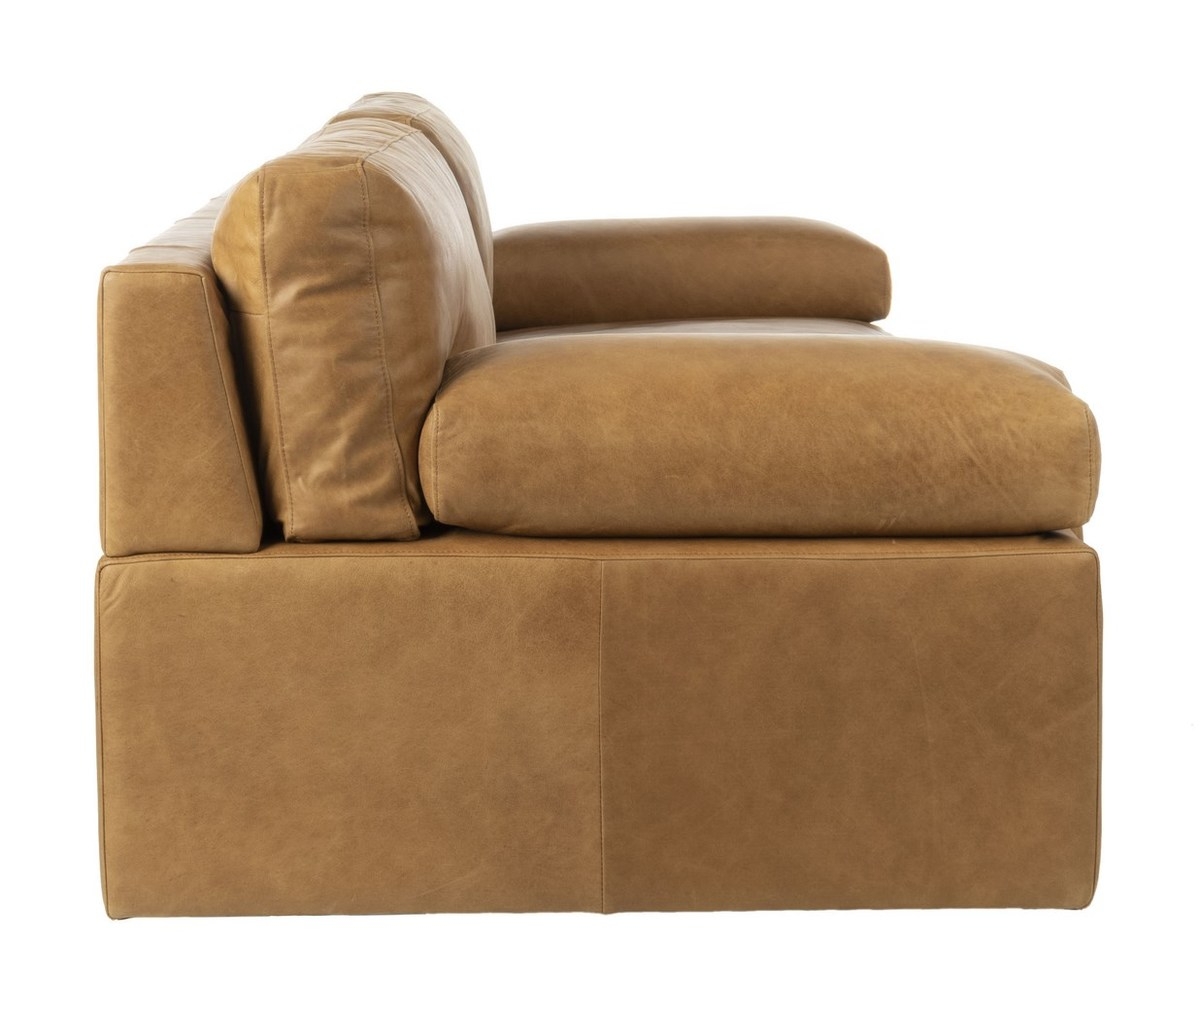 Sampson Italian Leather Sofa - Light Brown - Arlo Home - Image 6